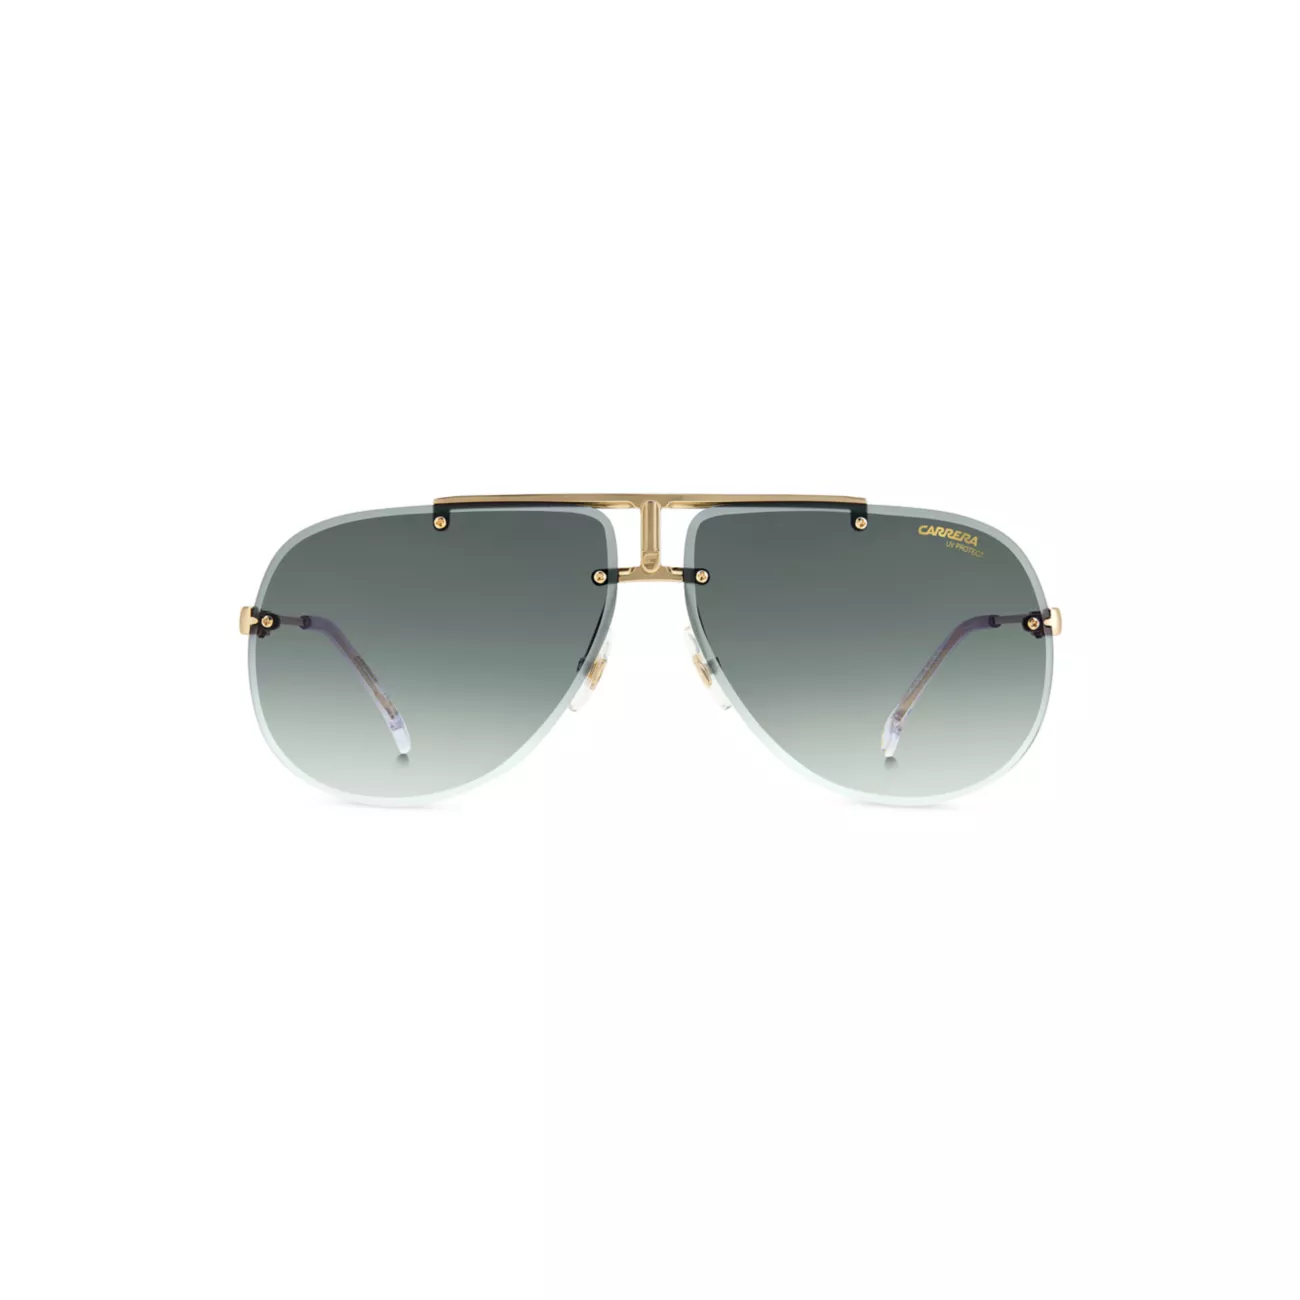 65MM Aviator Sunglasses Carrera